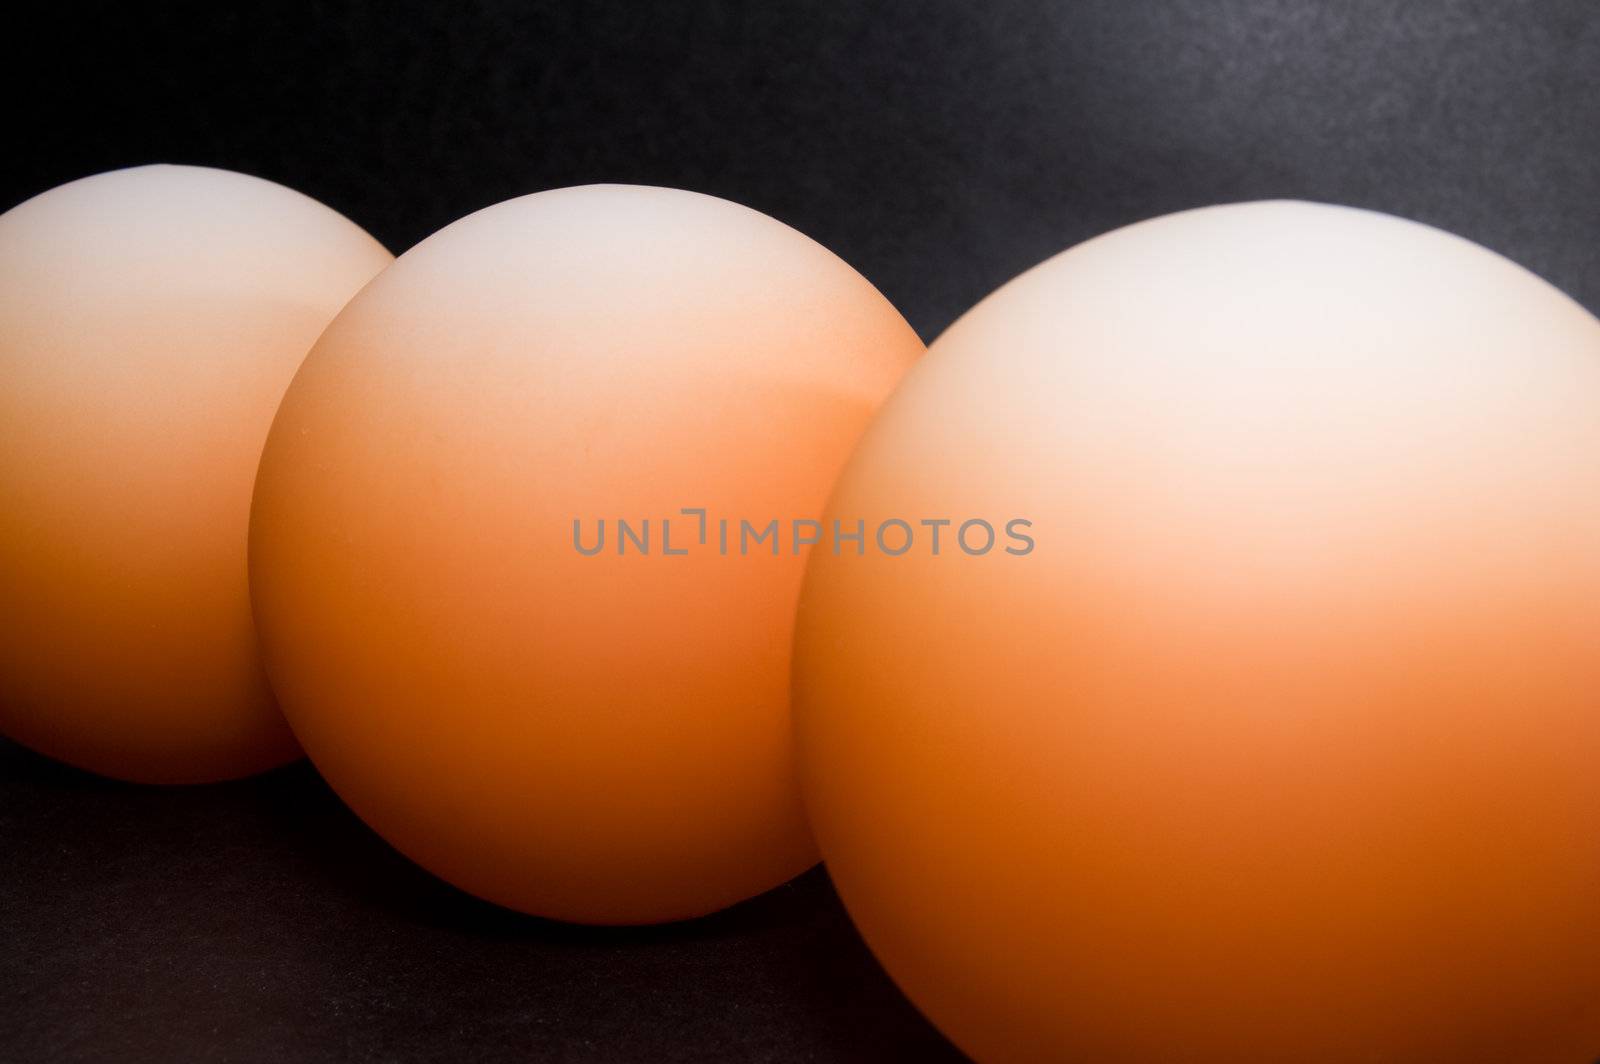 Abstract pattern of orange balls on black background